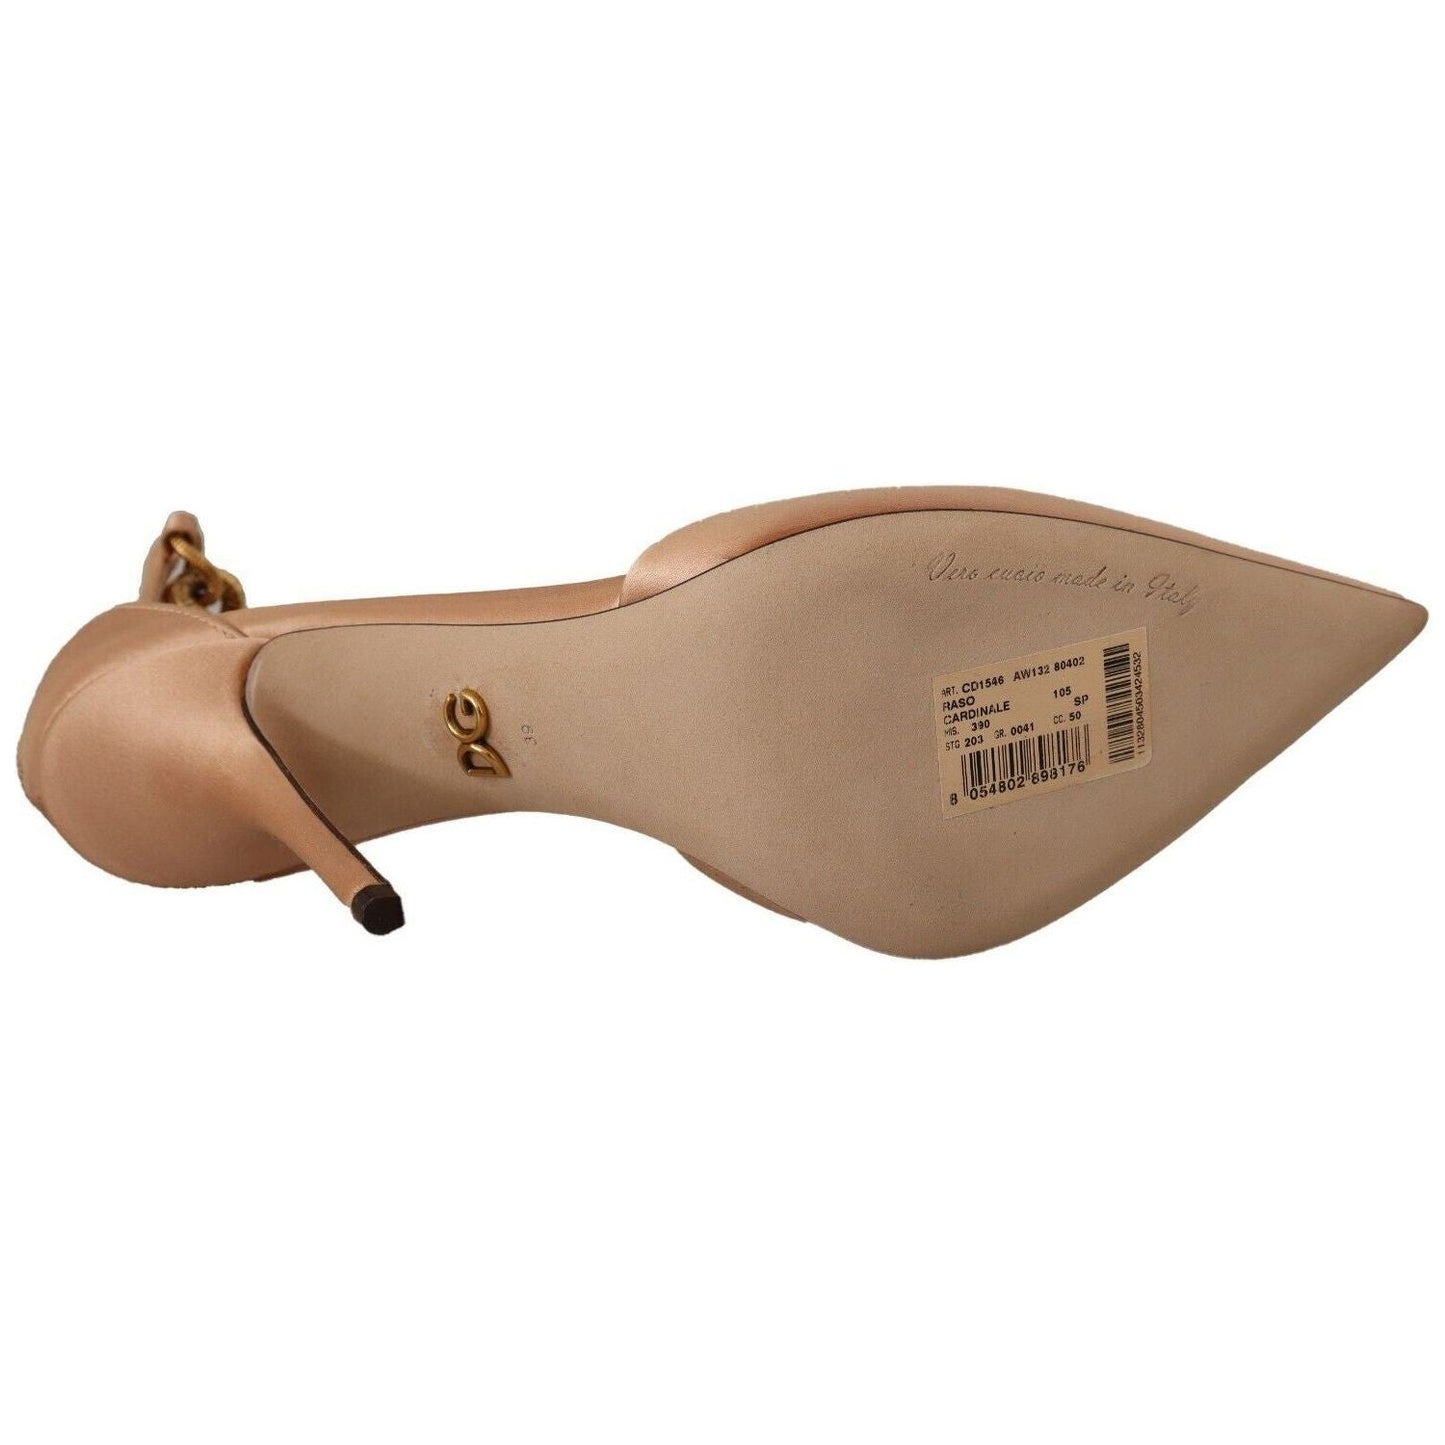 Dolce & Gabbana Elegant Beige Silk Ankle Strap Pumps beige-ankle-chain-strap-high-heels-pumps-shoes